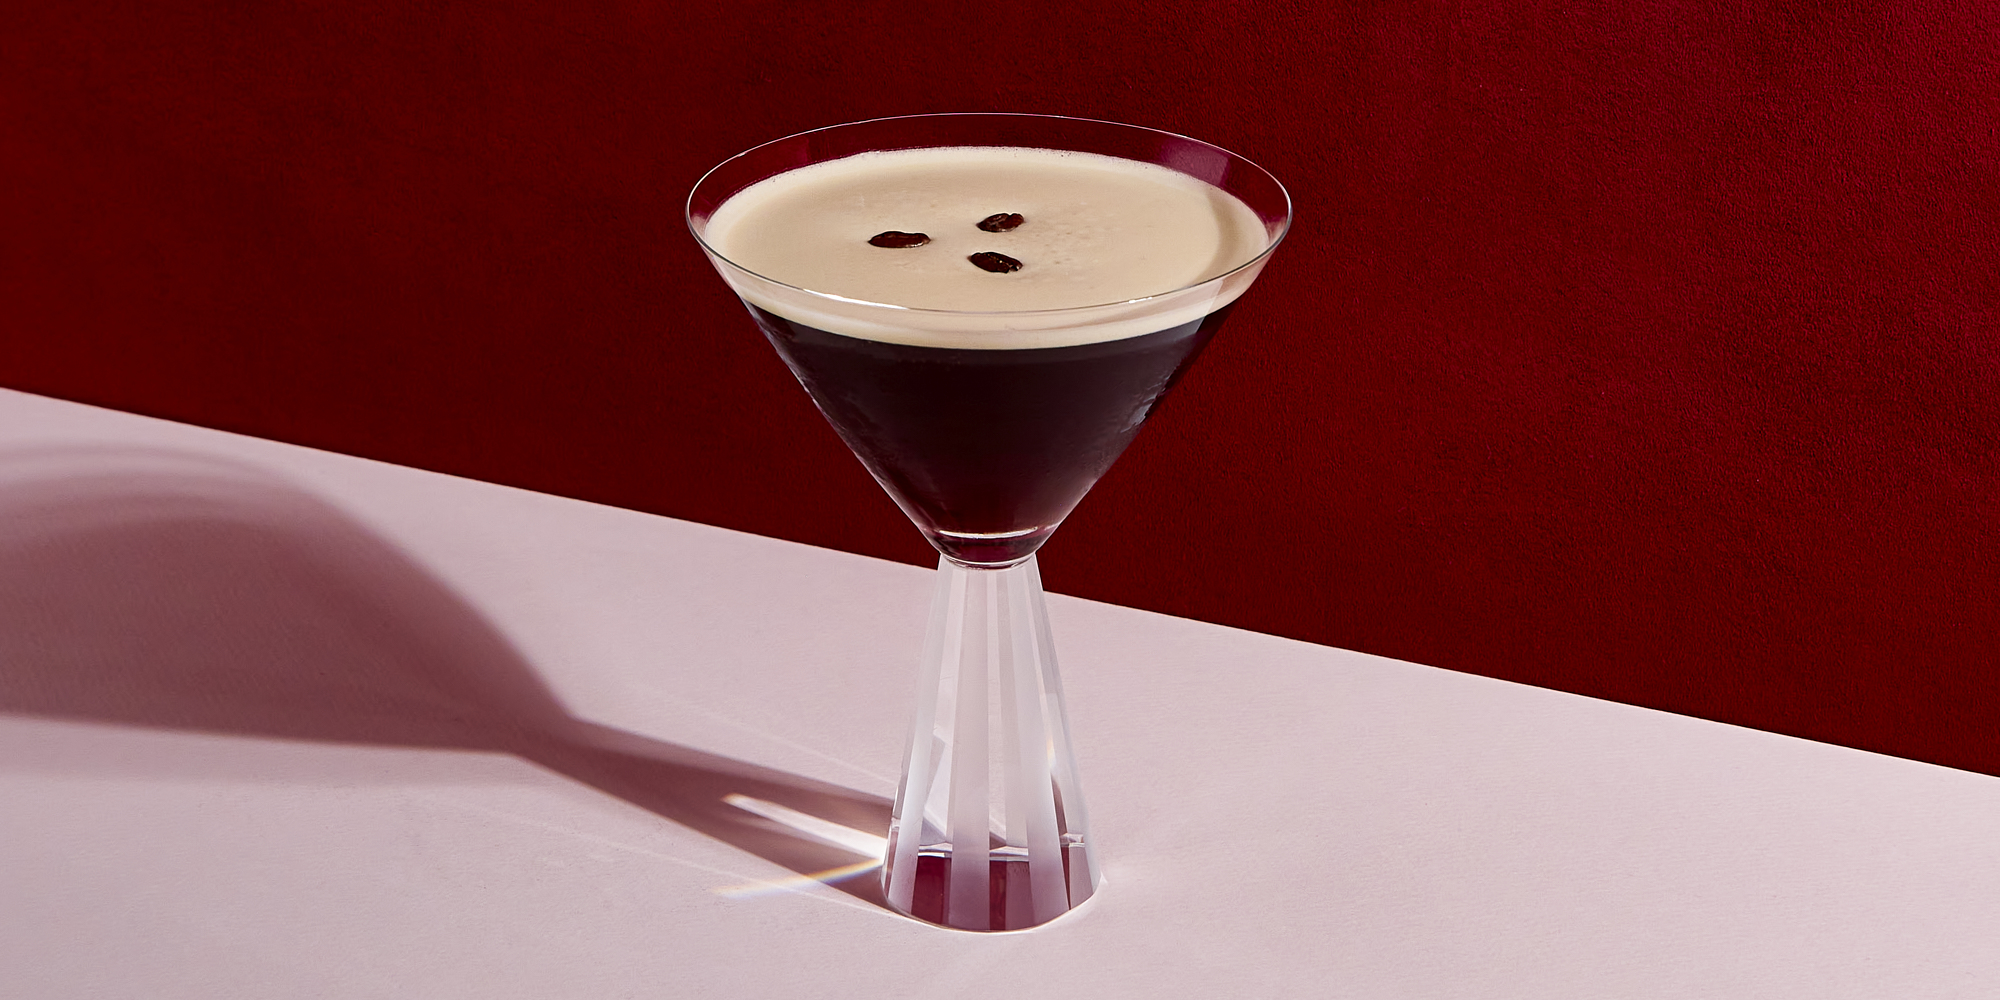 https://vinepair.com/wp-content/uploads/2023/03/espresso-martini-google.jpg